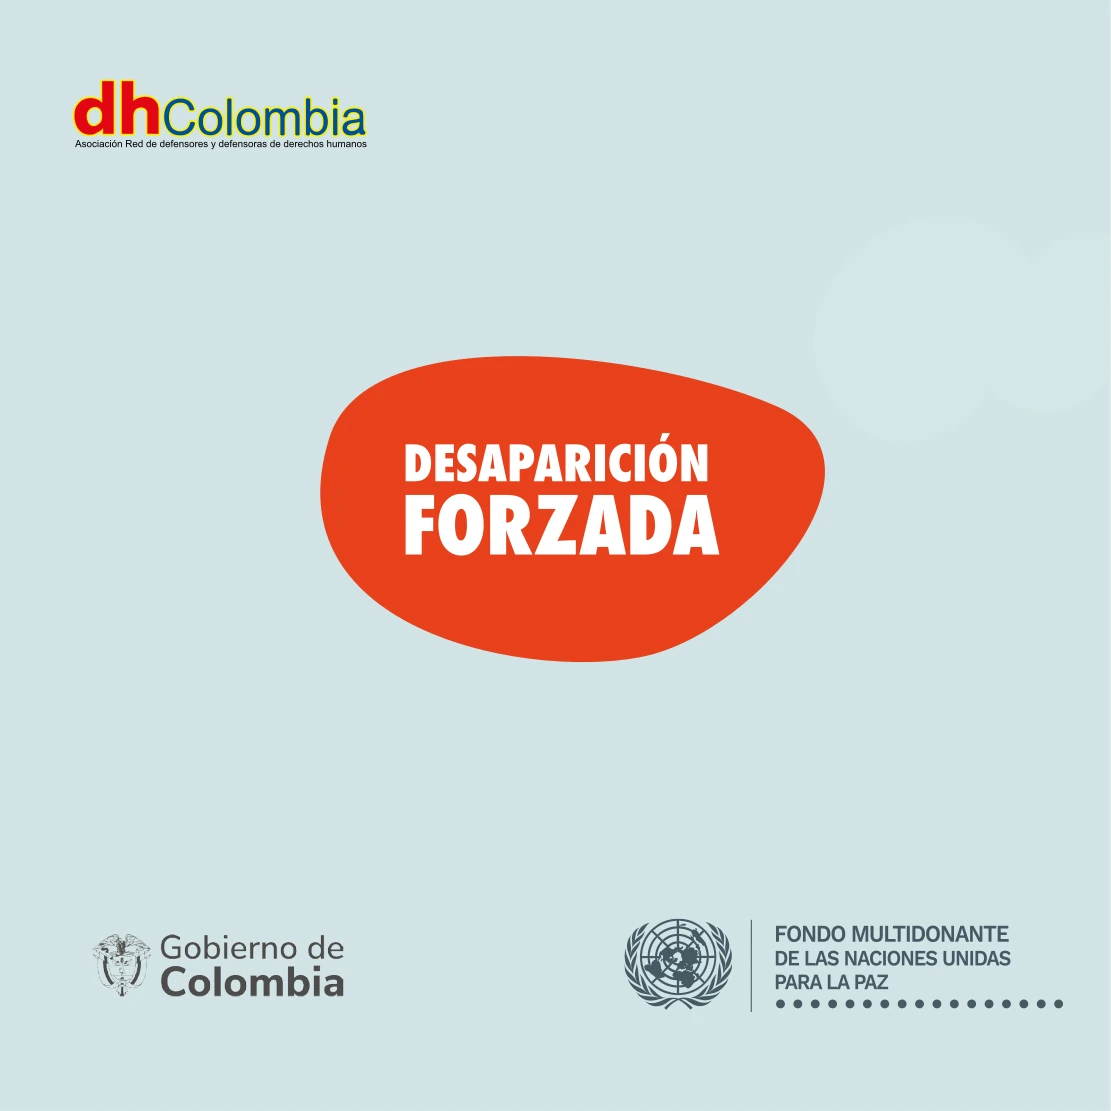 dhColombia Desaparición forzada 1.10 DESAPARICION FORZADA